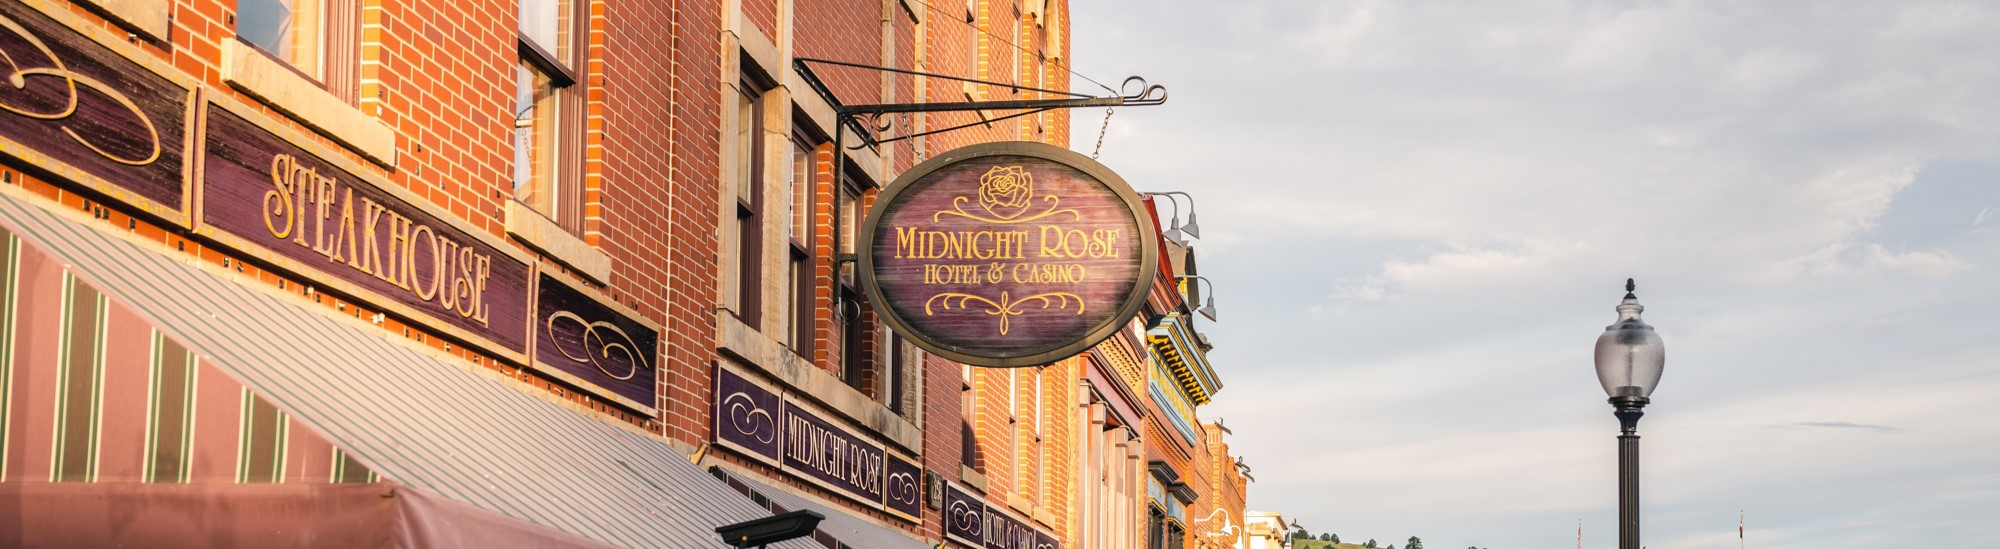 Purple Street sign of the Midnight Rose Hotel & Casino